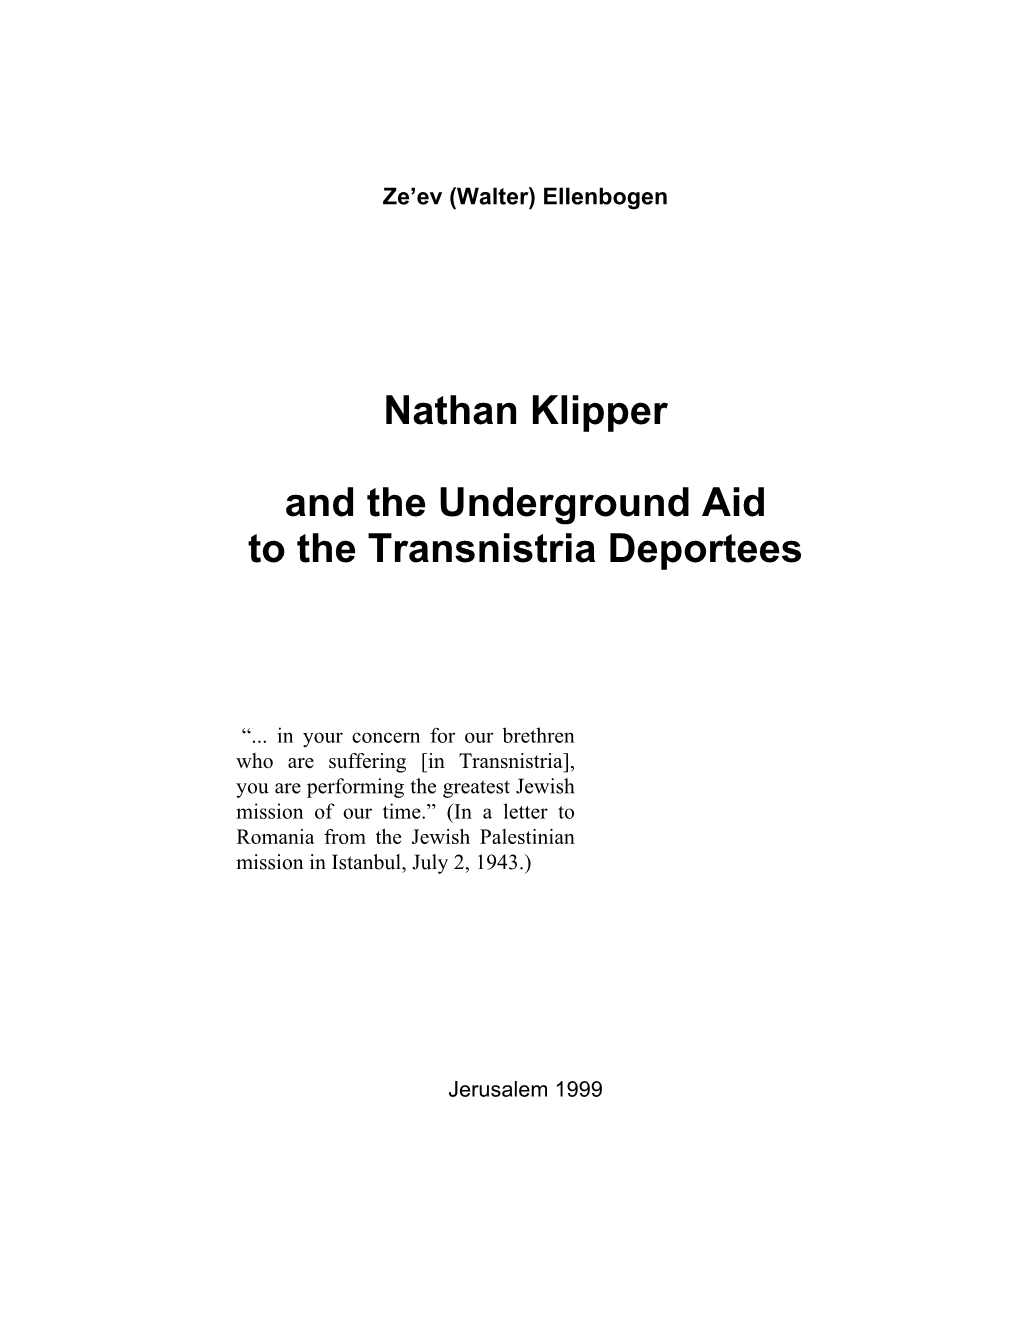 Nathan Klipper